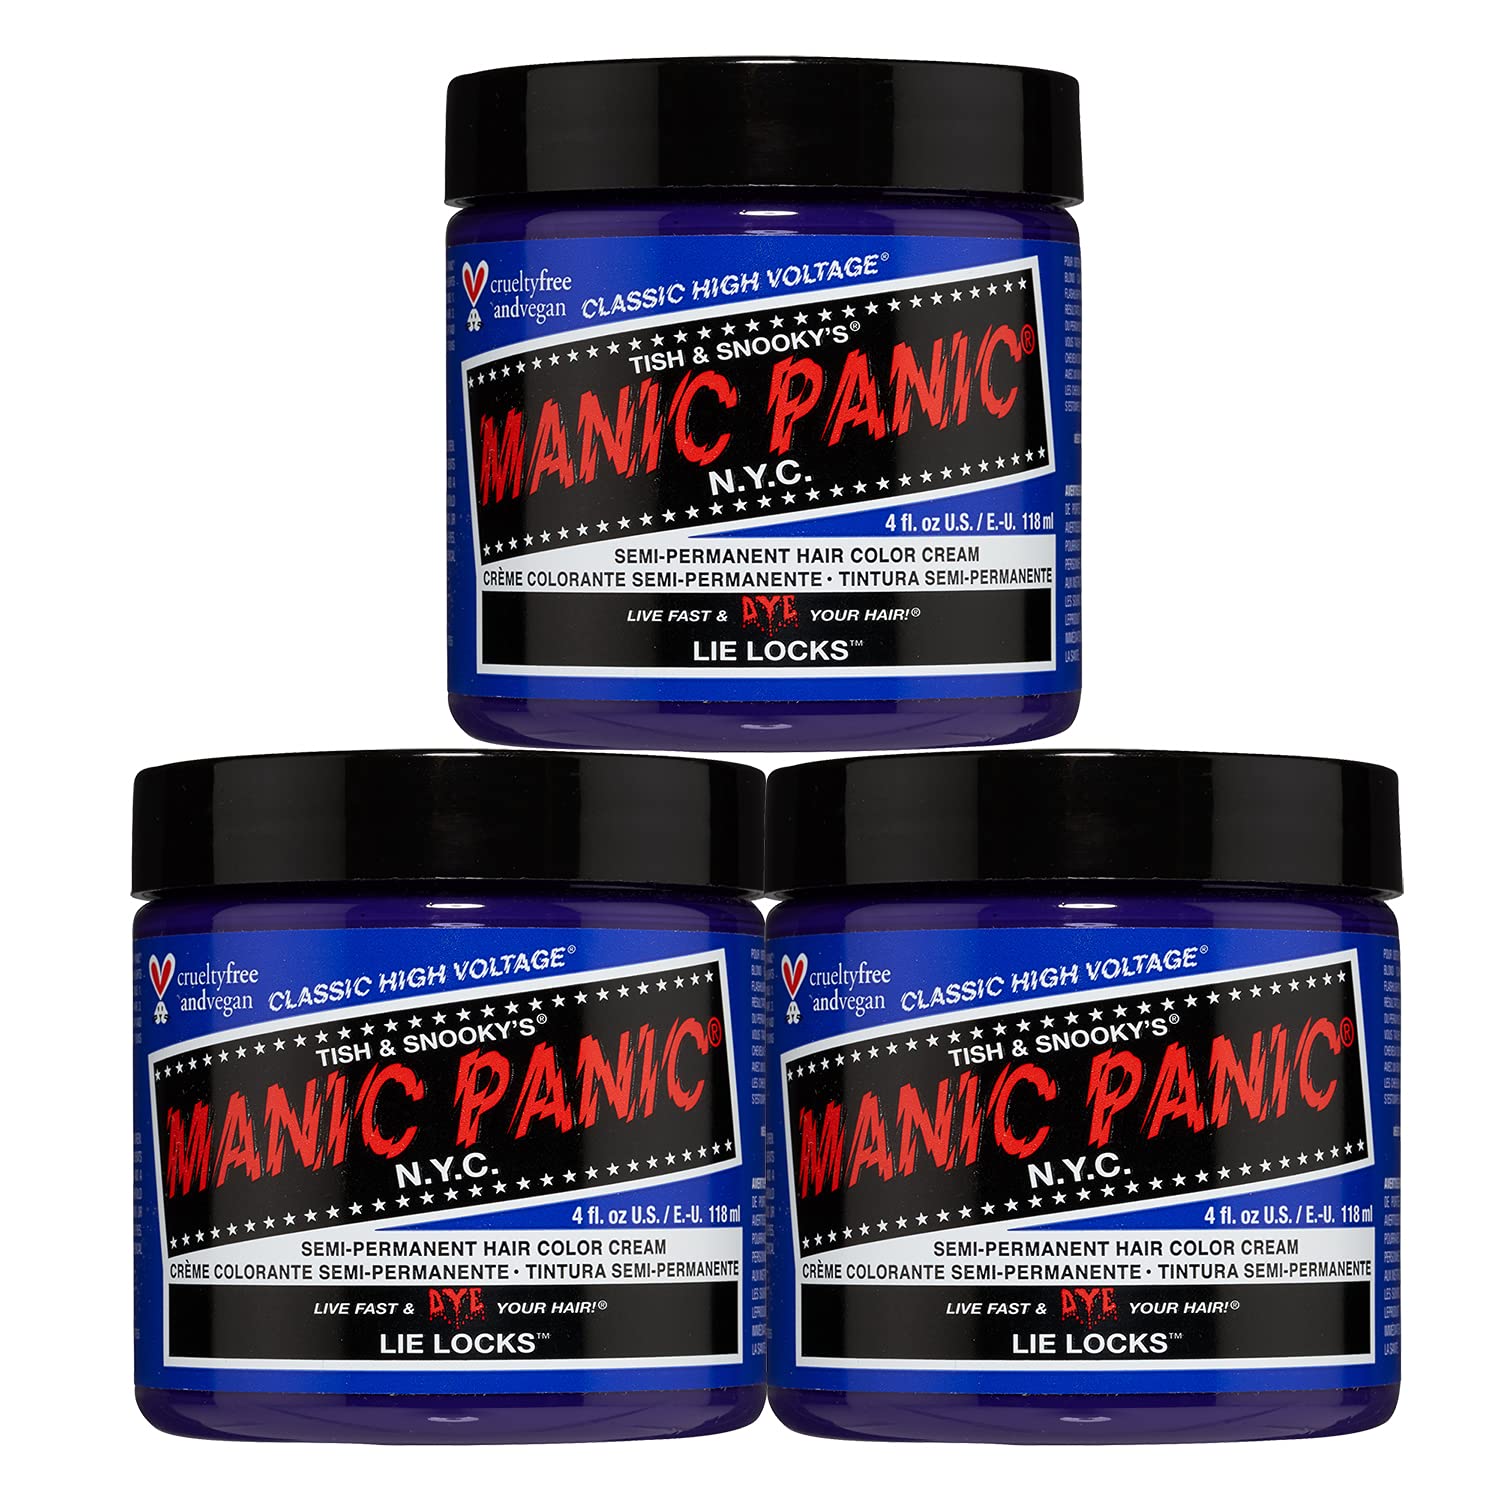 MANIC PANIC Lie Locks – Beauty Pro Distributor